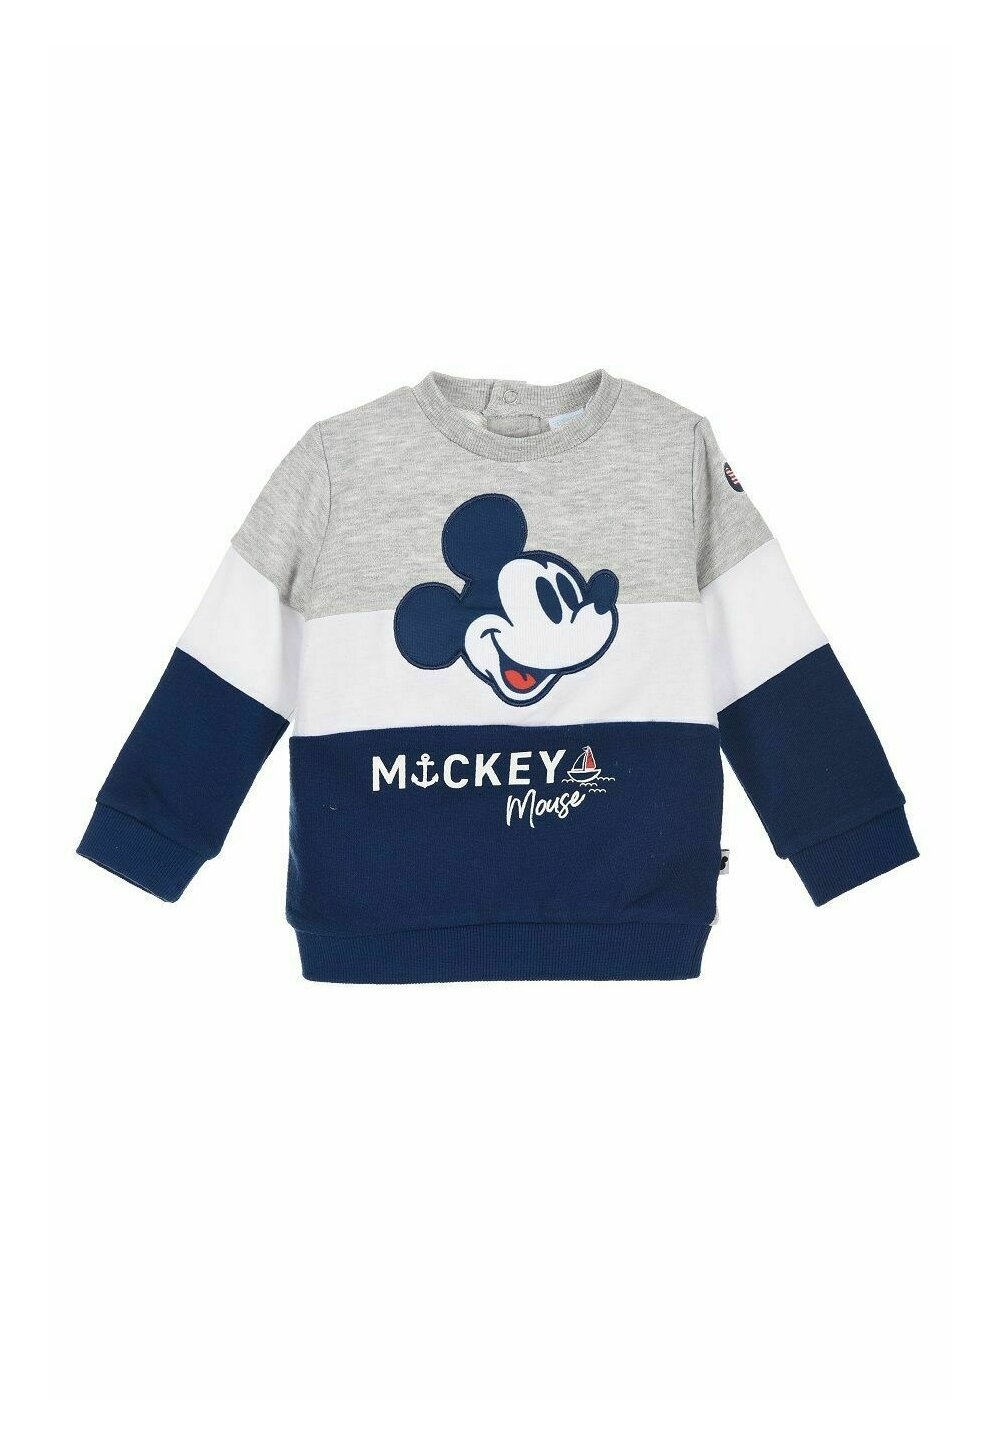 Bluza bebe, Mickey Mouse, gri cu bluemarin imagine